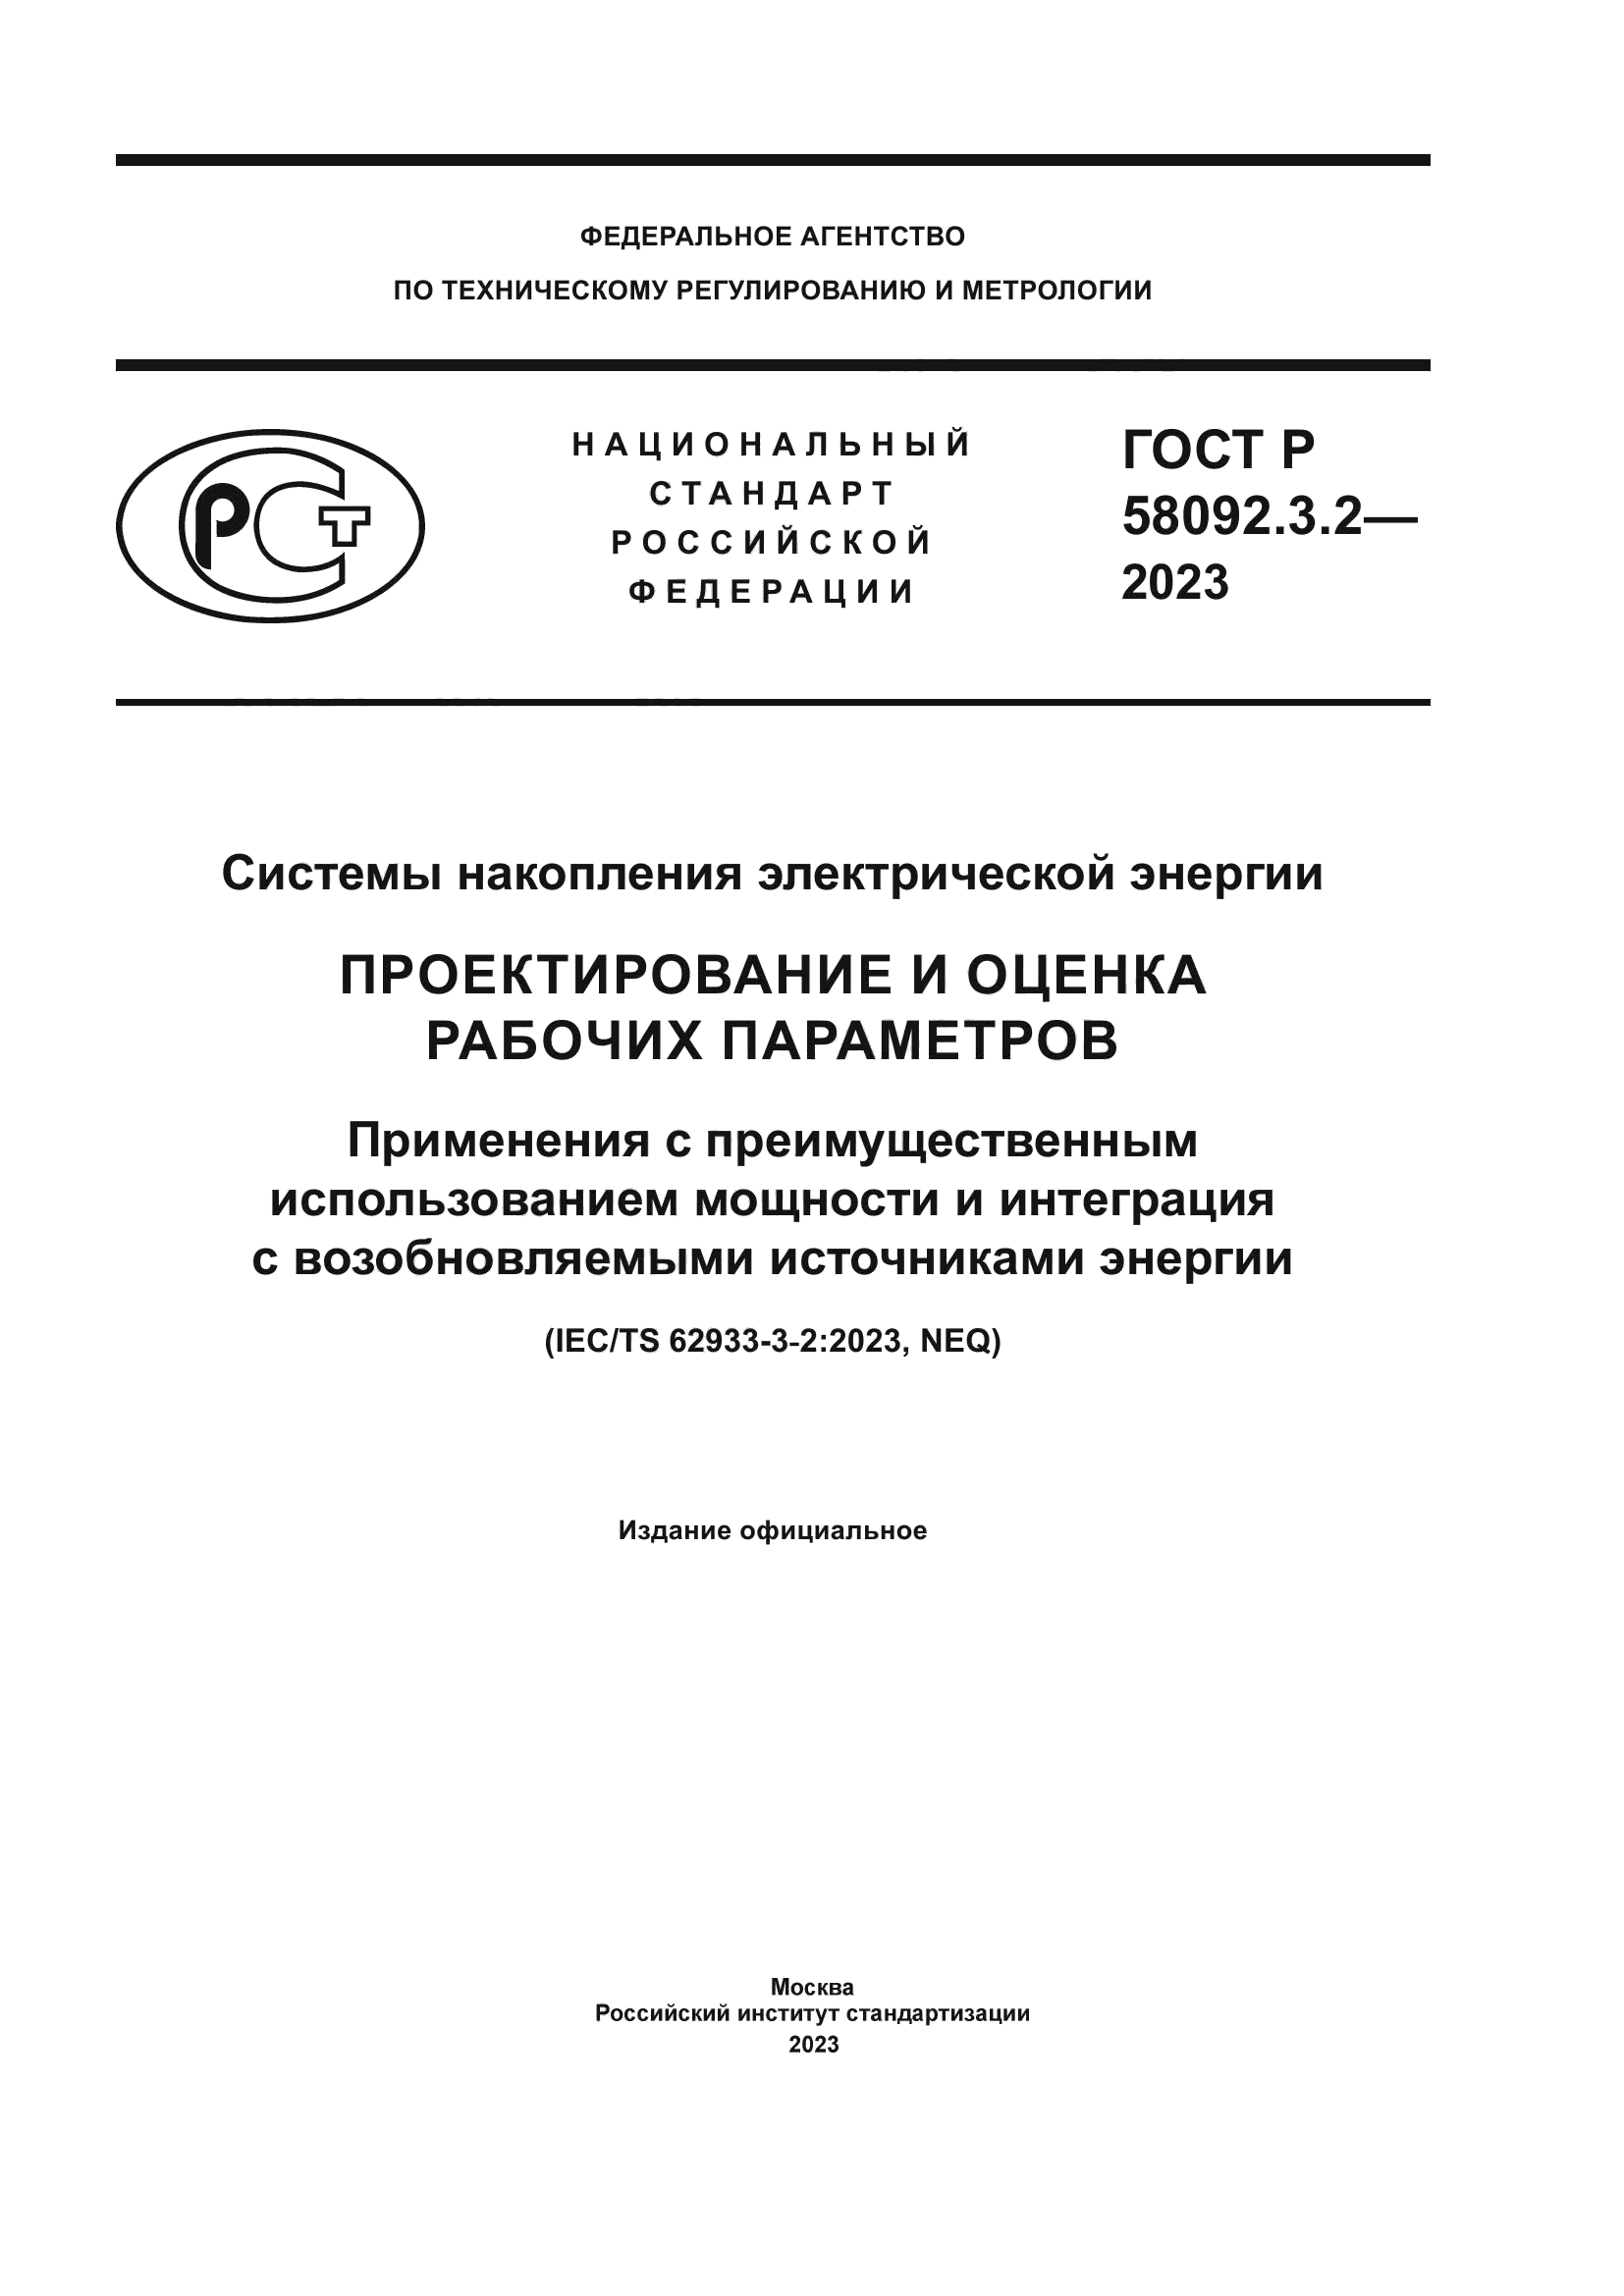 ГОСТ Р 58092.3.2-2023